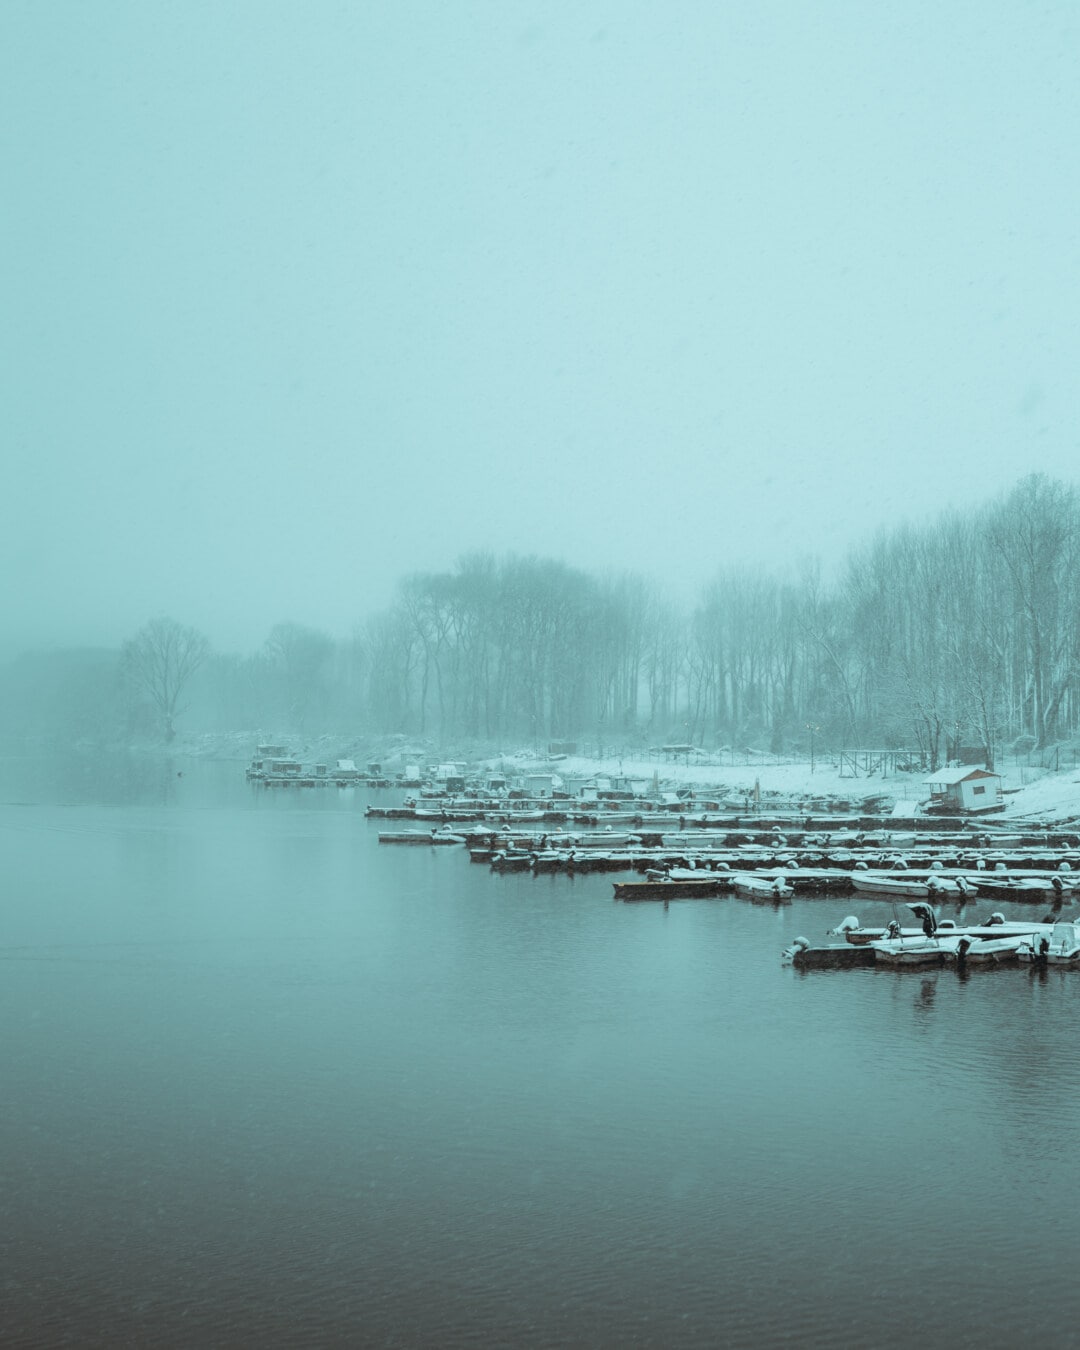 neblig, Morgen, Winter, am See, November, Flussschiff, Seebrücke, Wasser, Nebel, Schnee